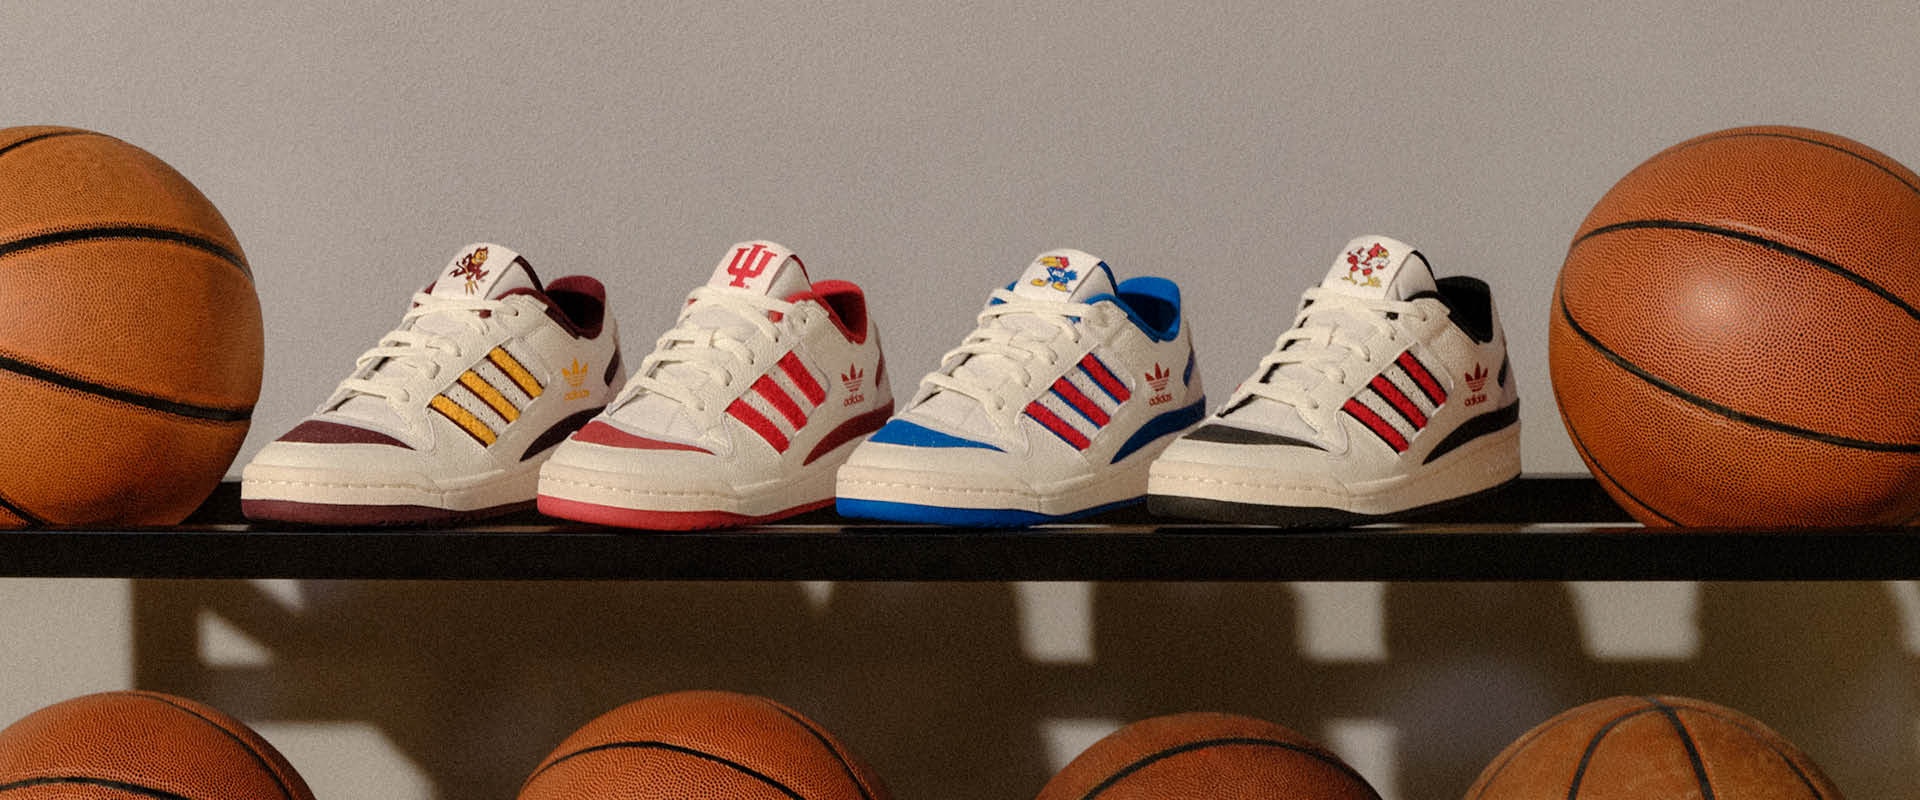 adidas Originals Basketball Footwear